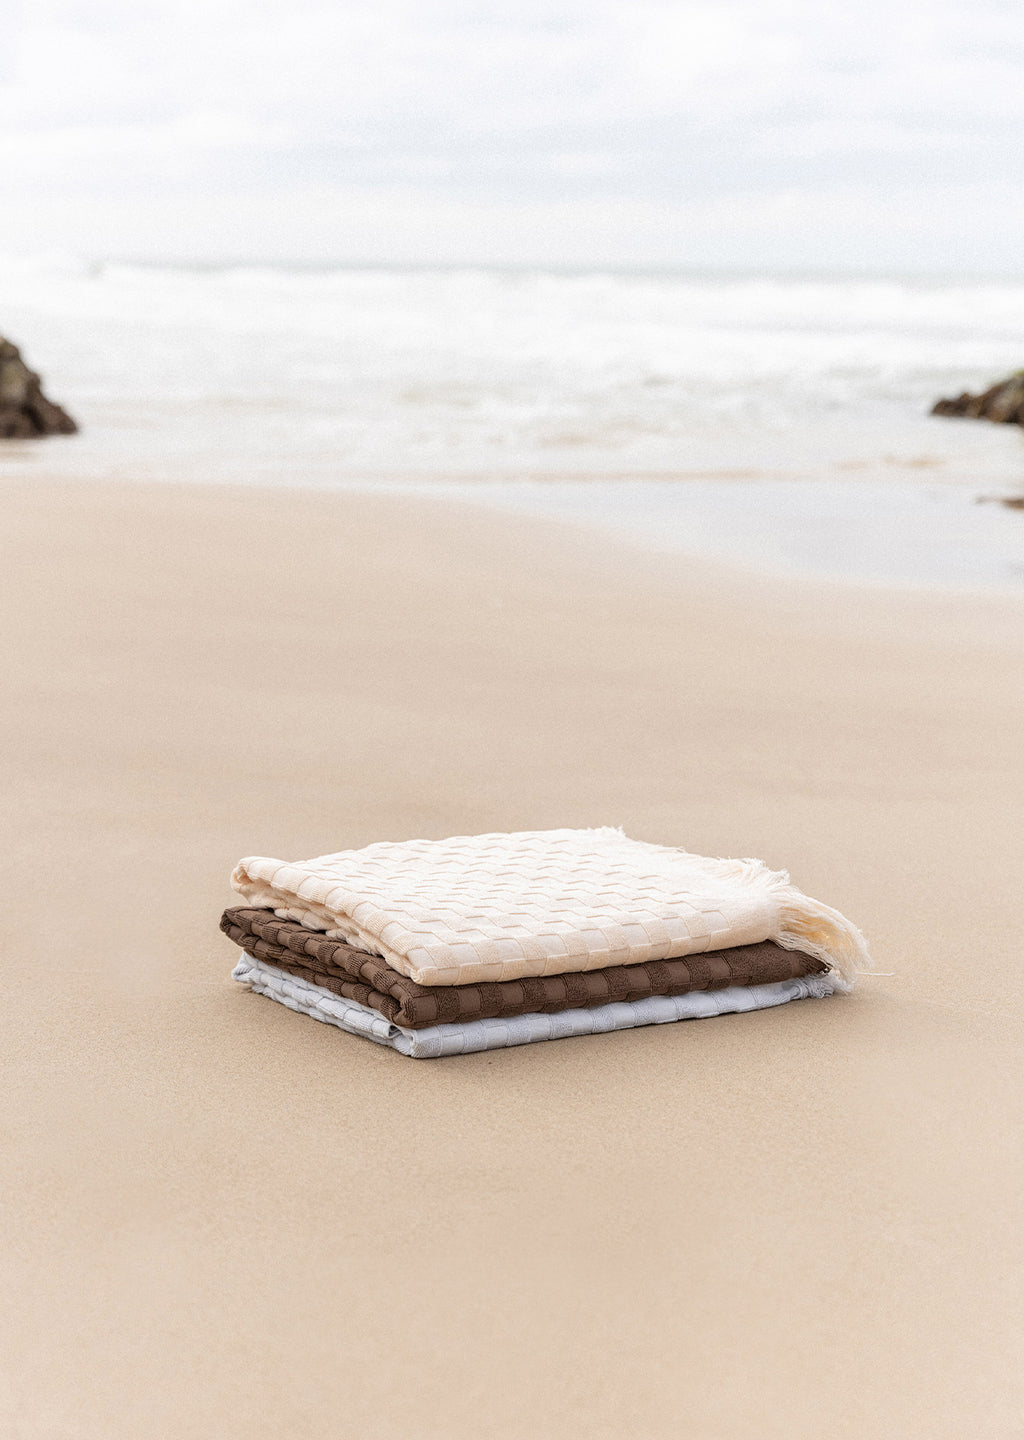 Louis Vuitton Monogram Classic Beach Towel - Blue Bath, Bedding